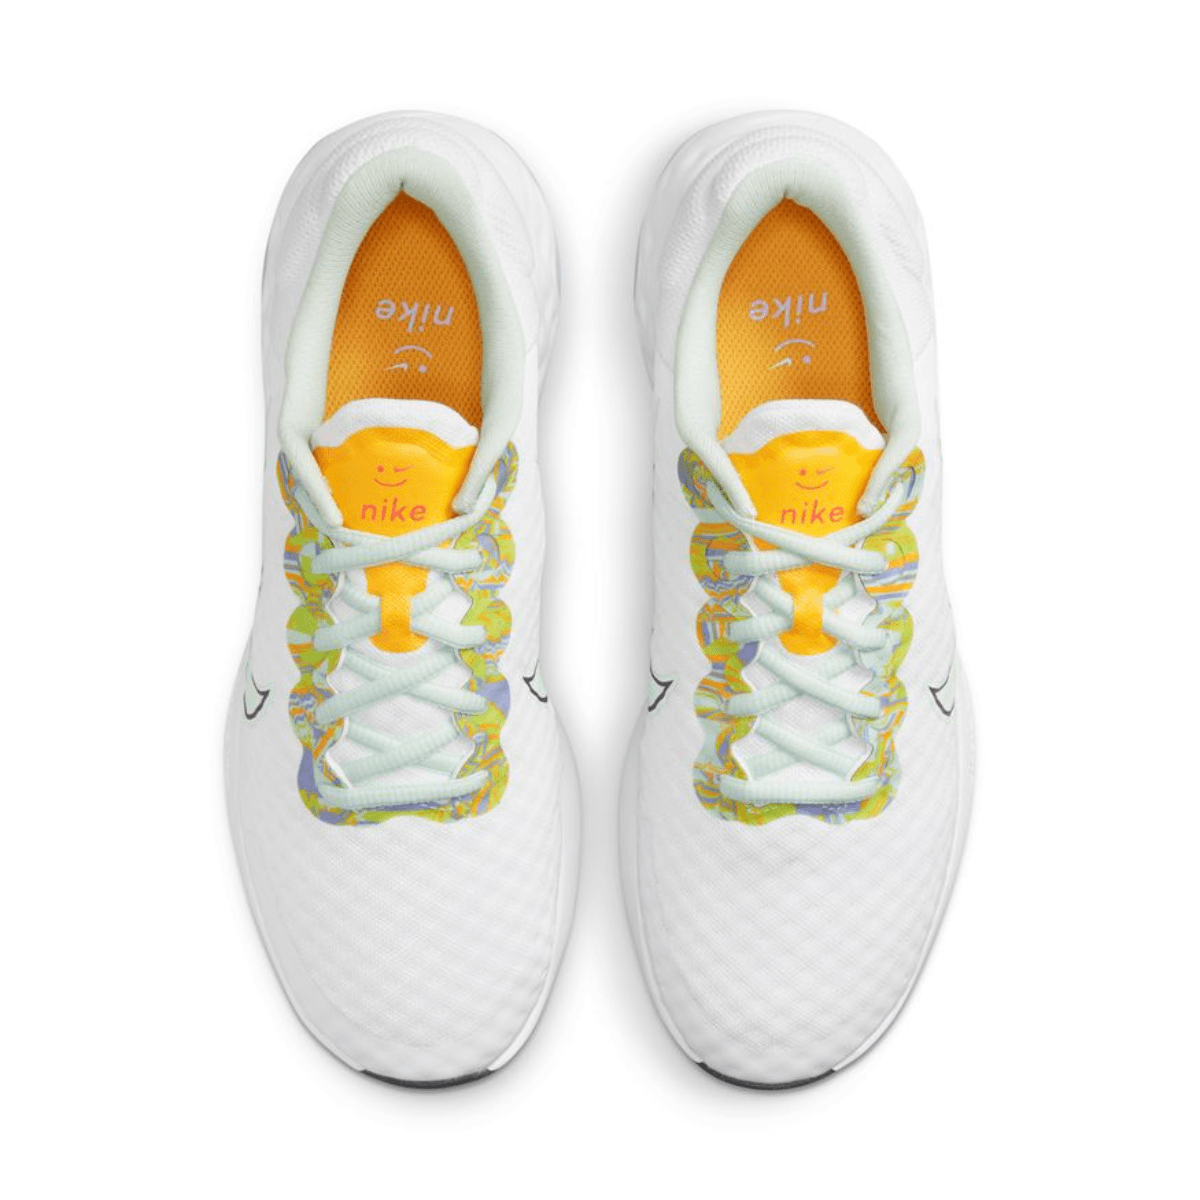 Nike Renew Ride Premium Shoe - Women's - Als.com